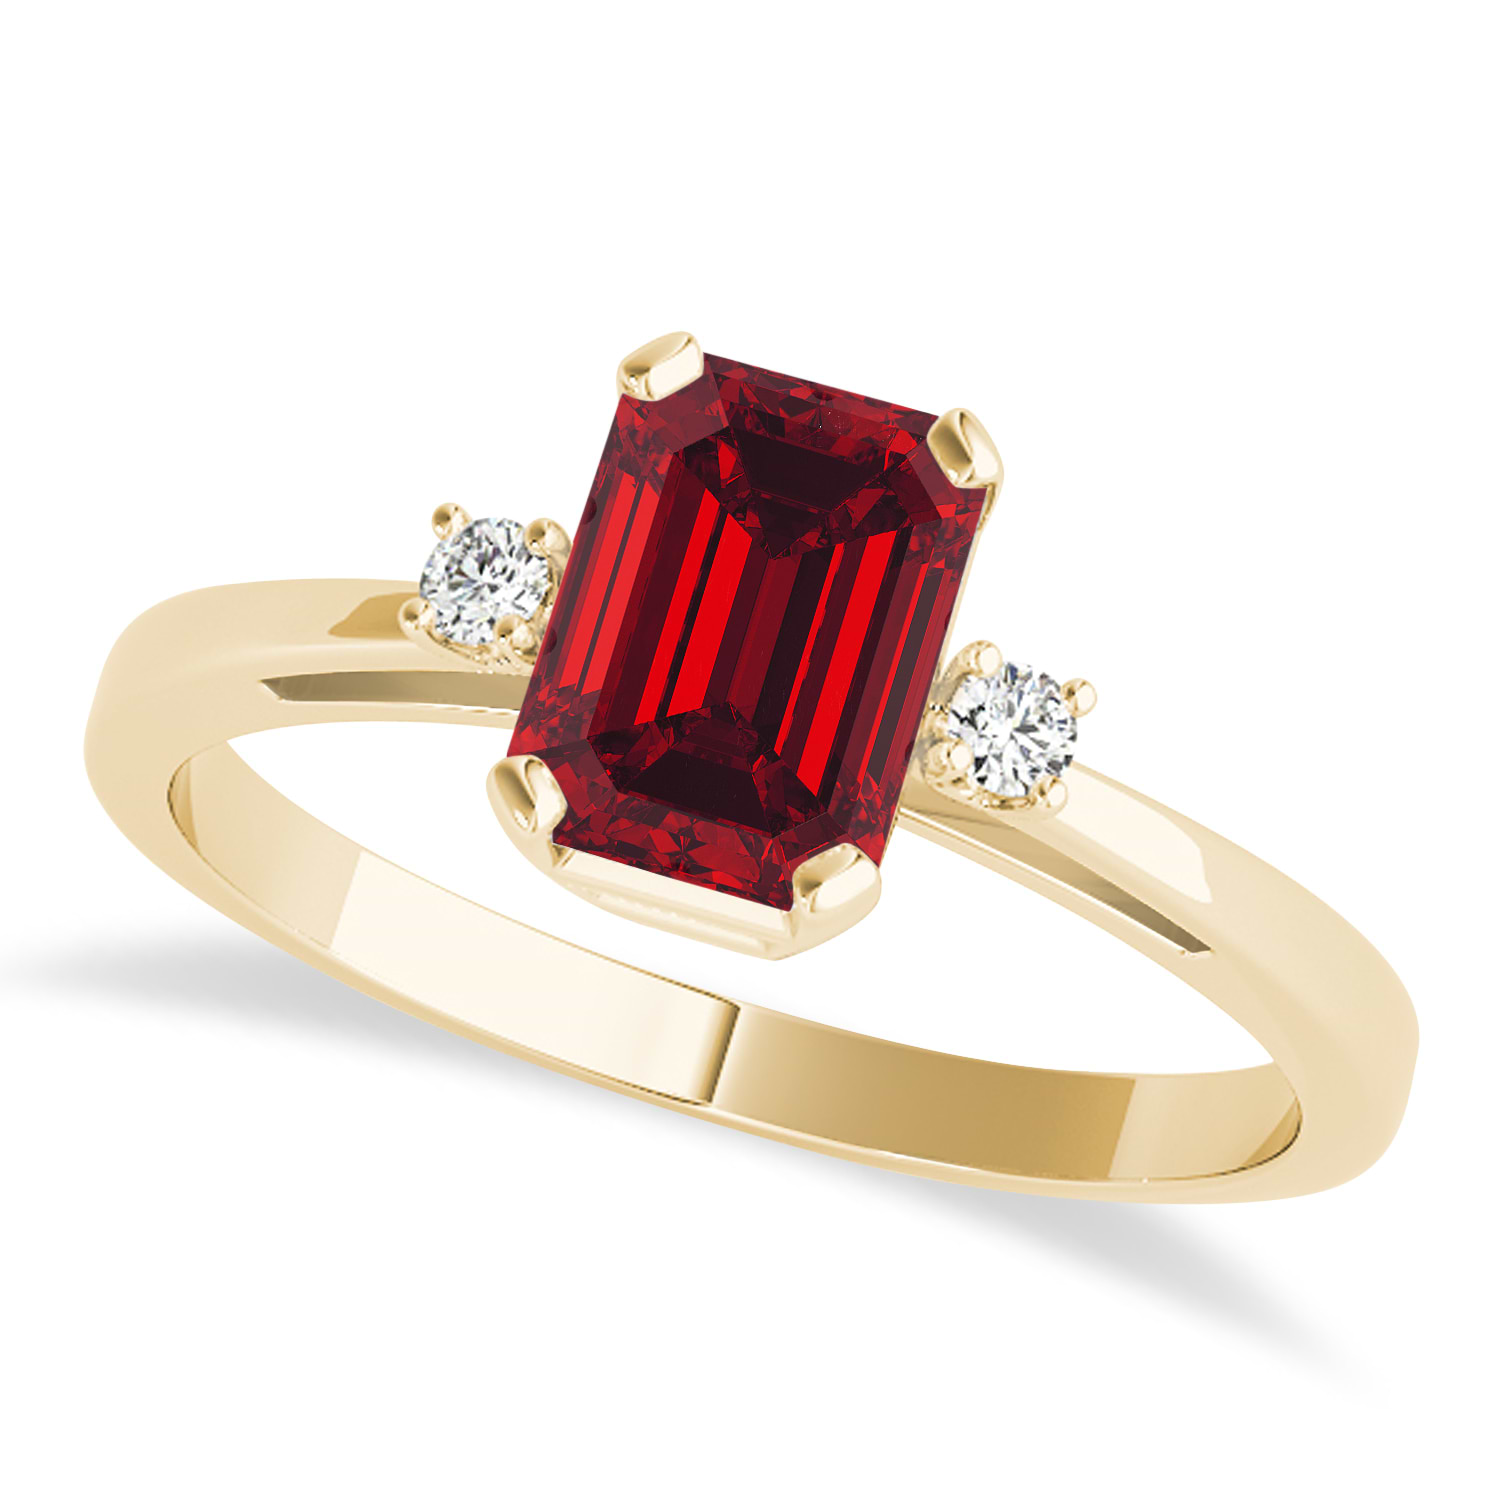 Vintage 1.10 CTW Ruby, Sapphire, Emerald & Diamond Cluster Ring